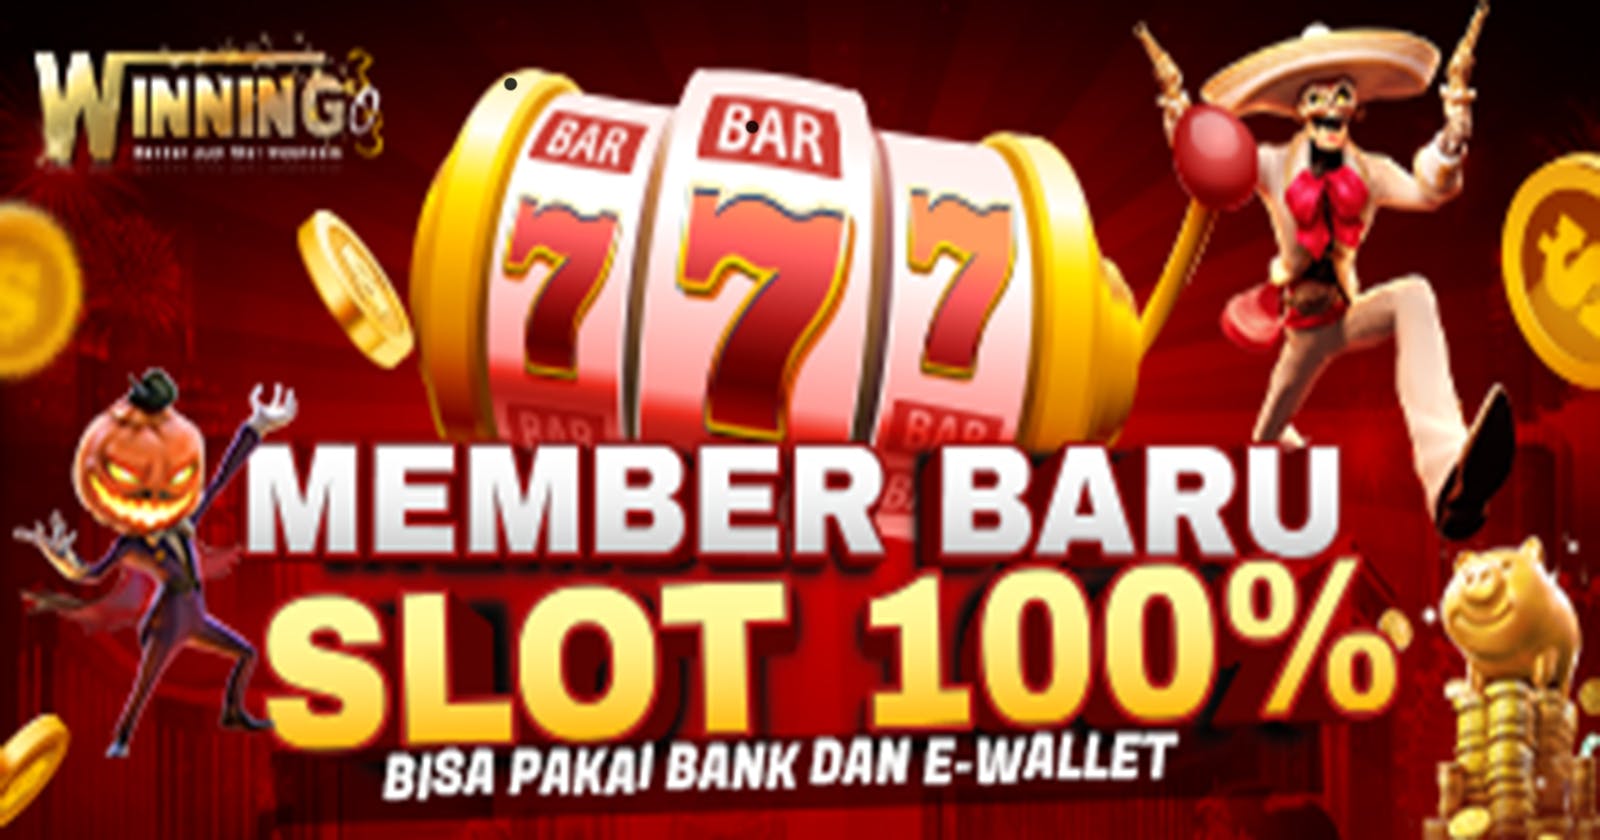 Winning303: Situs Slot Bank BSI Anti Rungkad Terpercaya